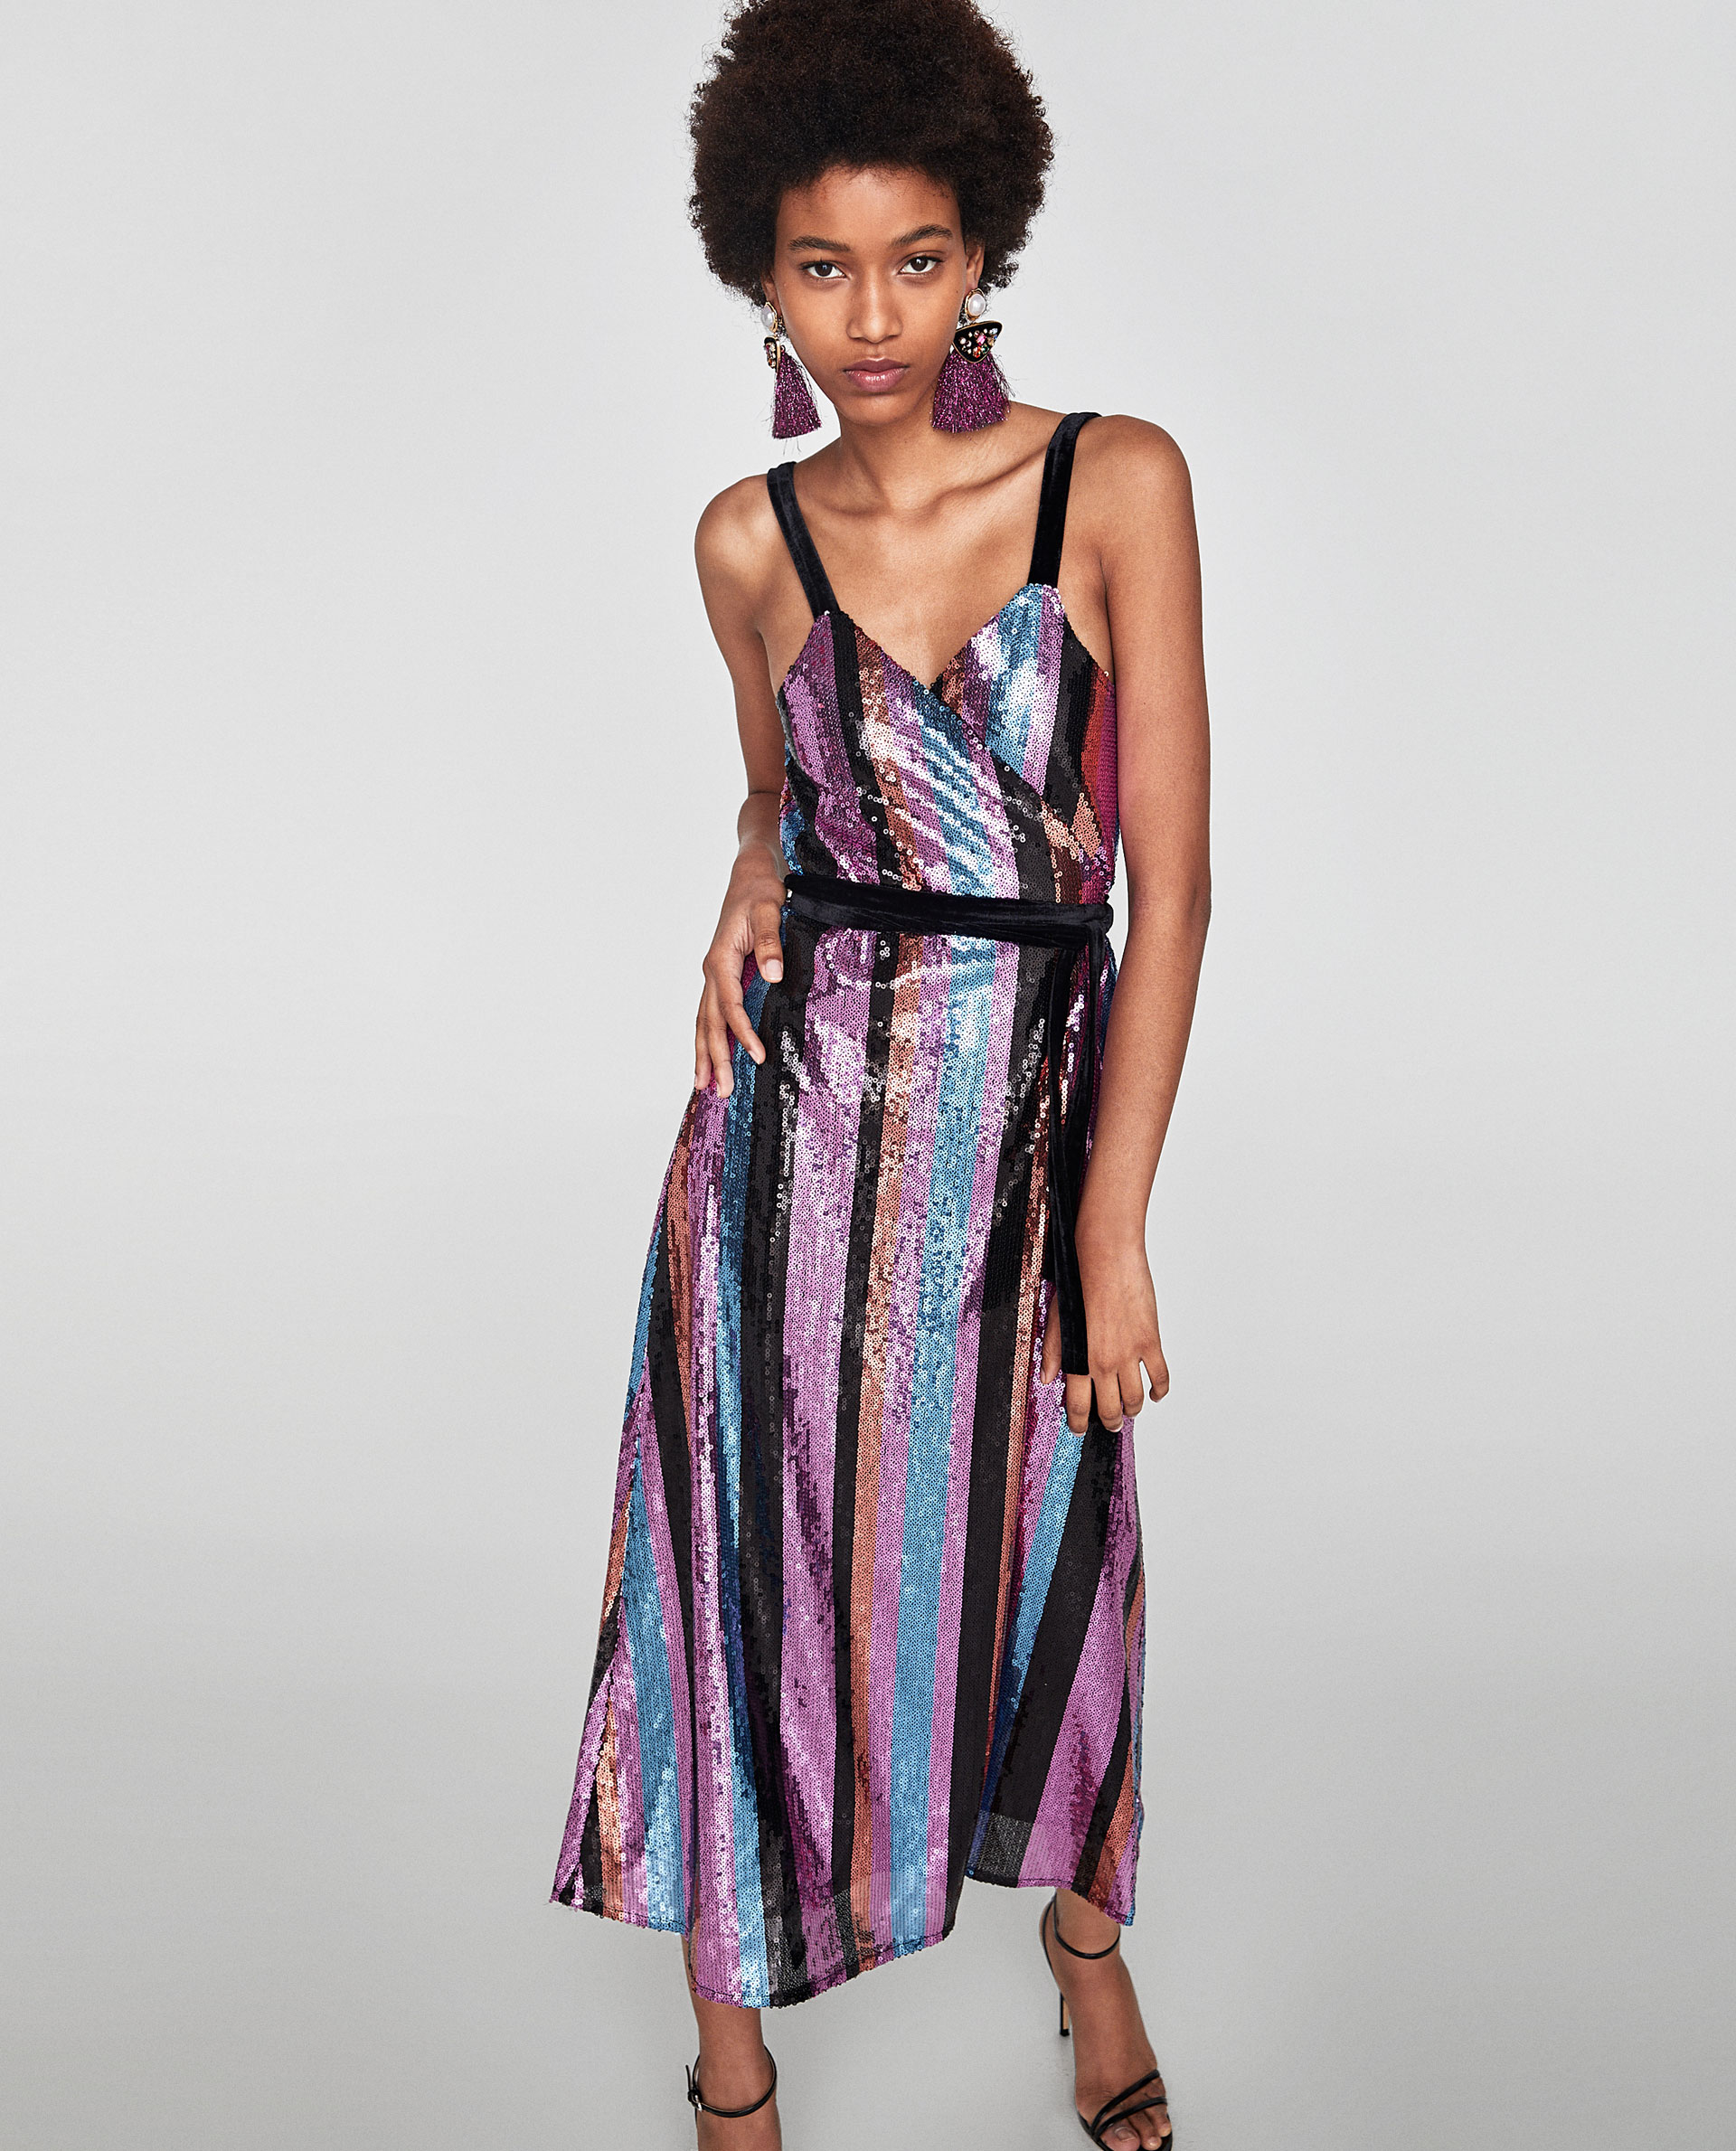 Zara Crossover Dress - £79.99